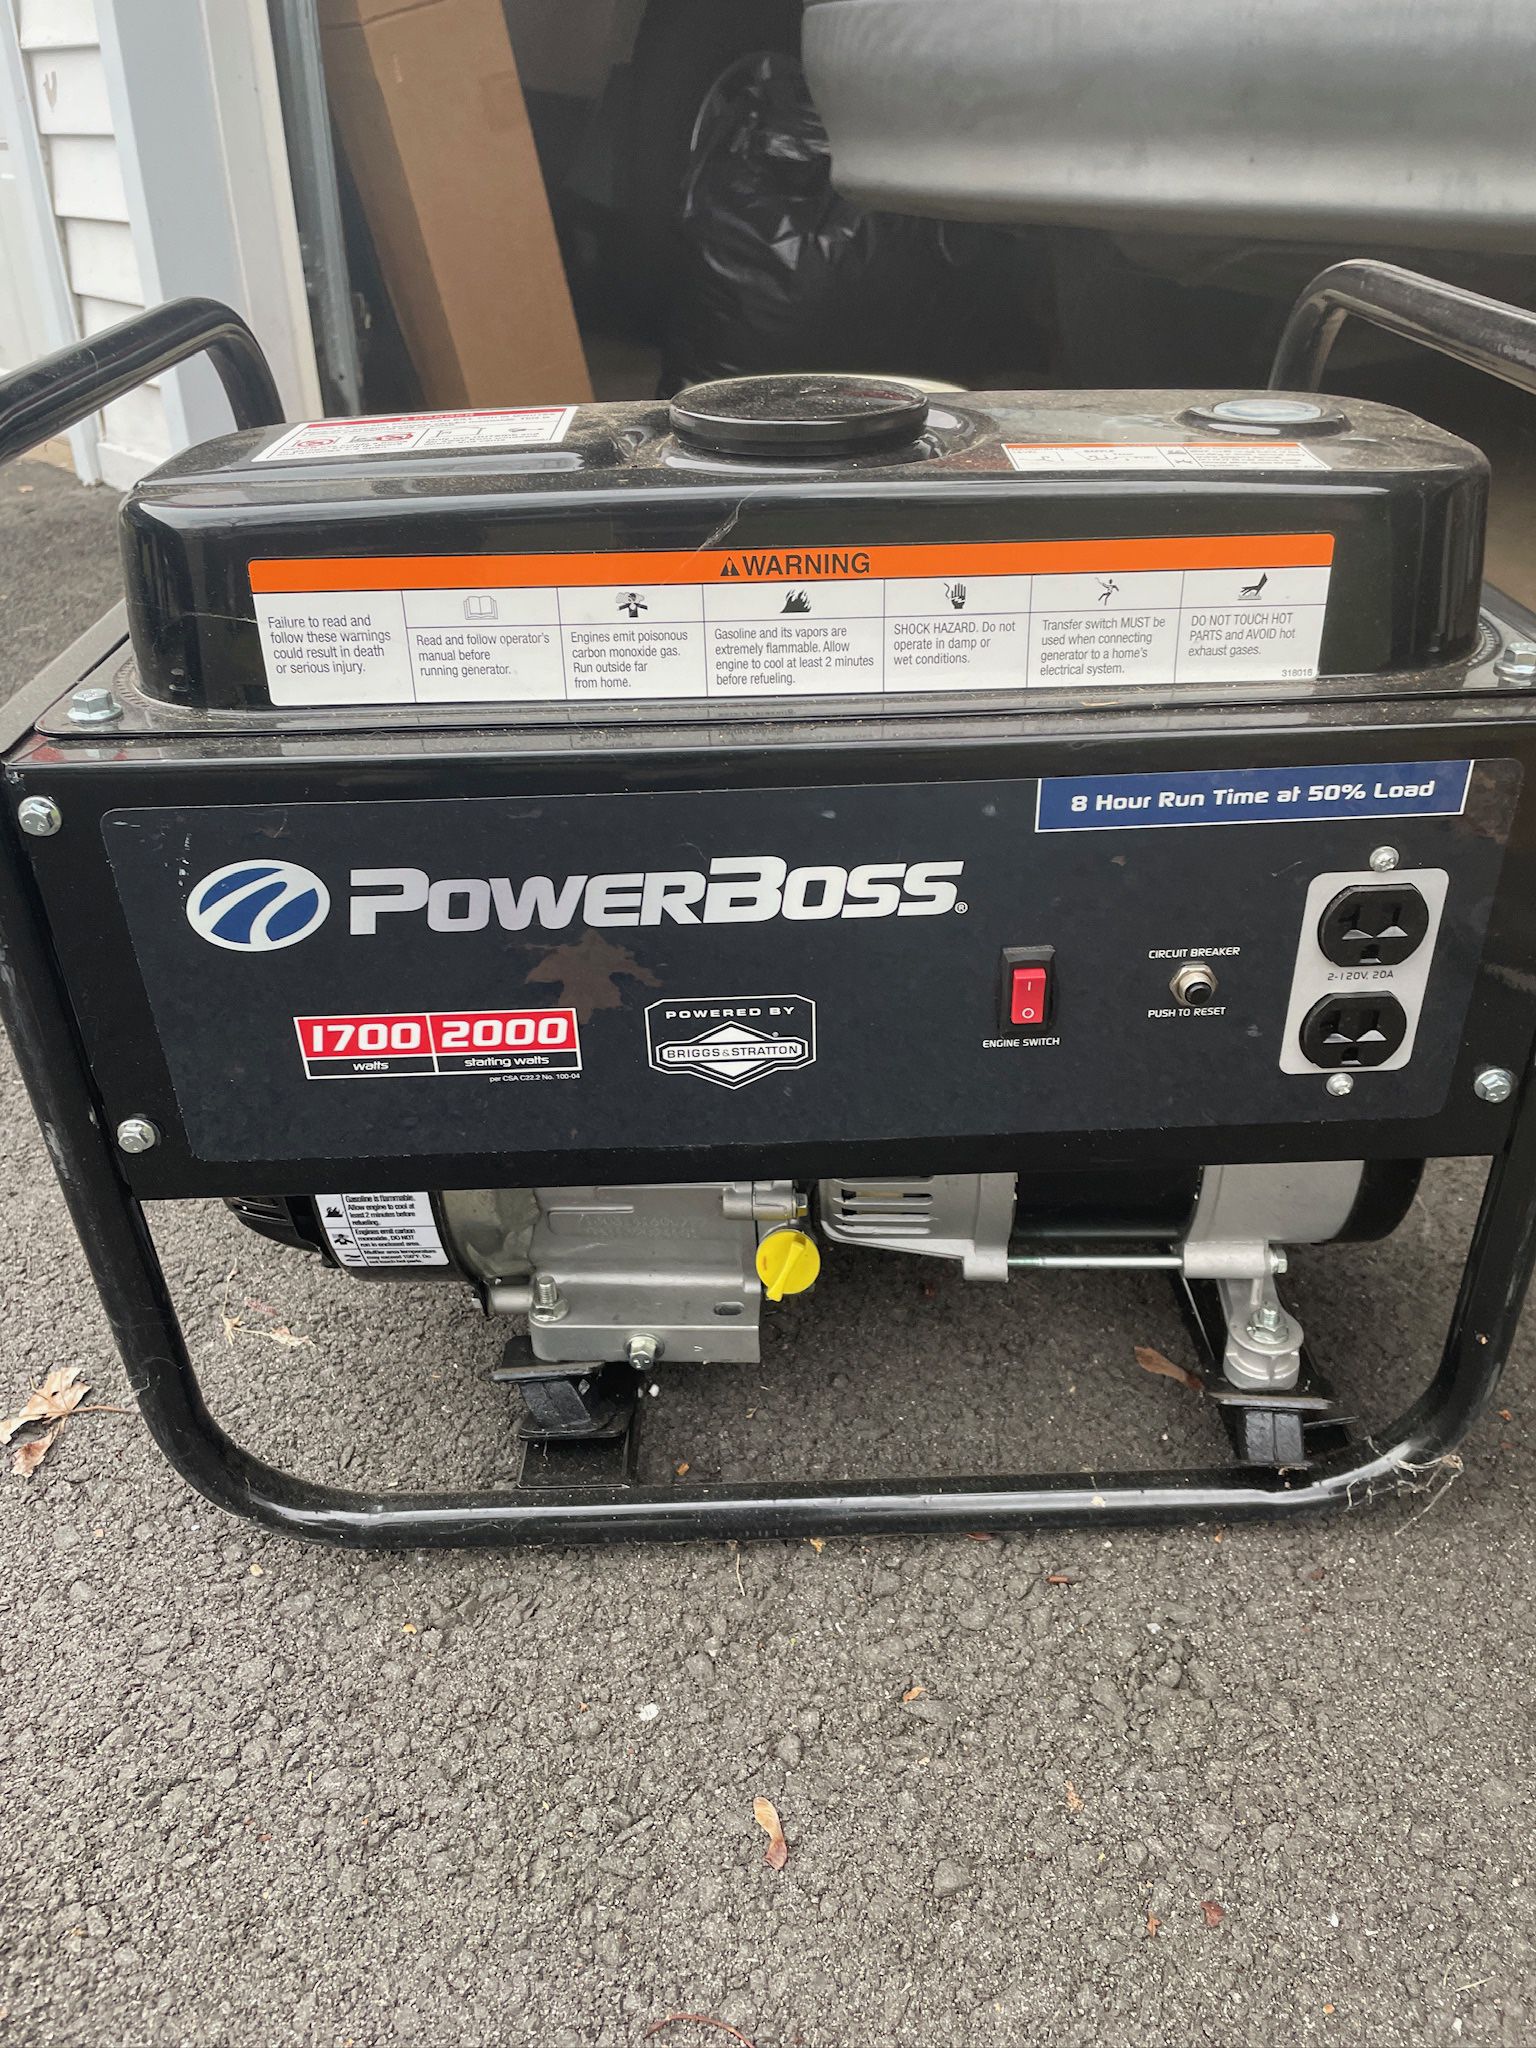 Powerboss Generator 550 Series 1700 W 